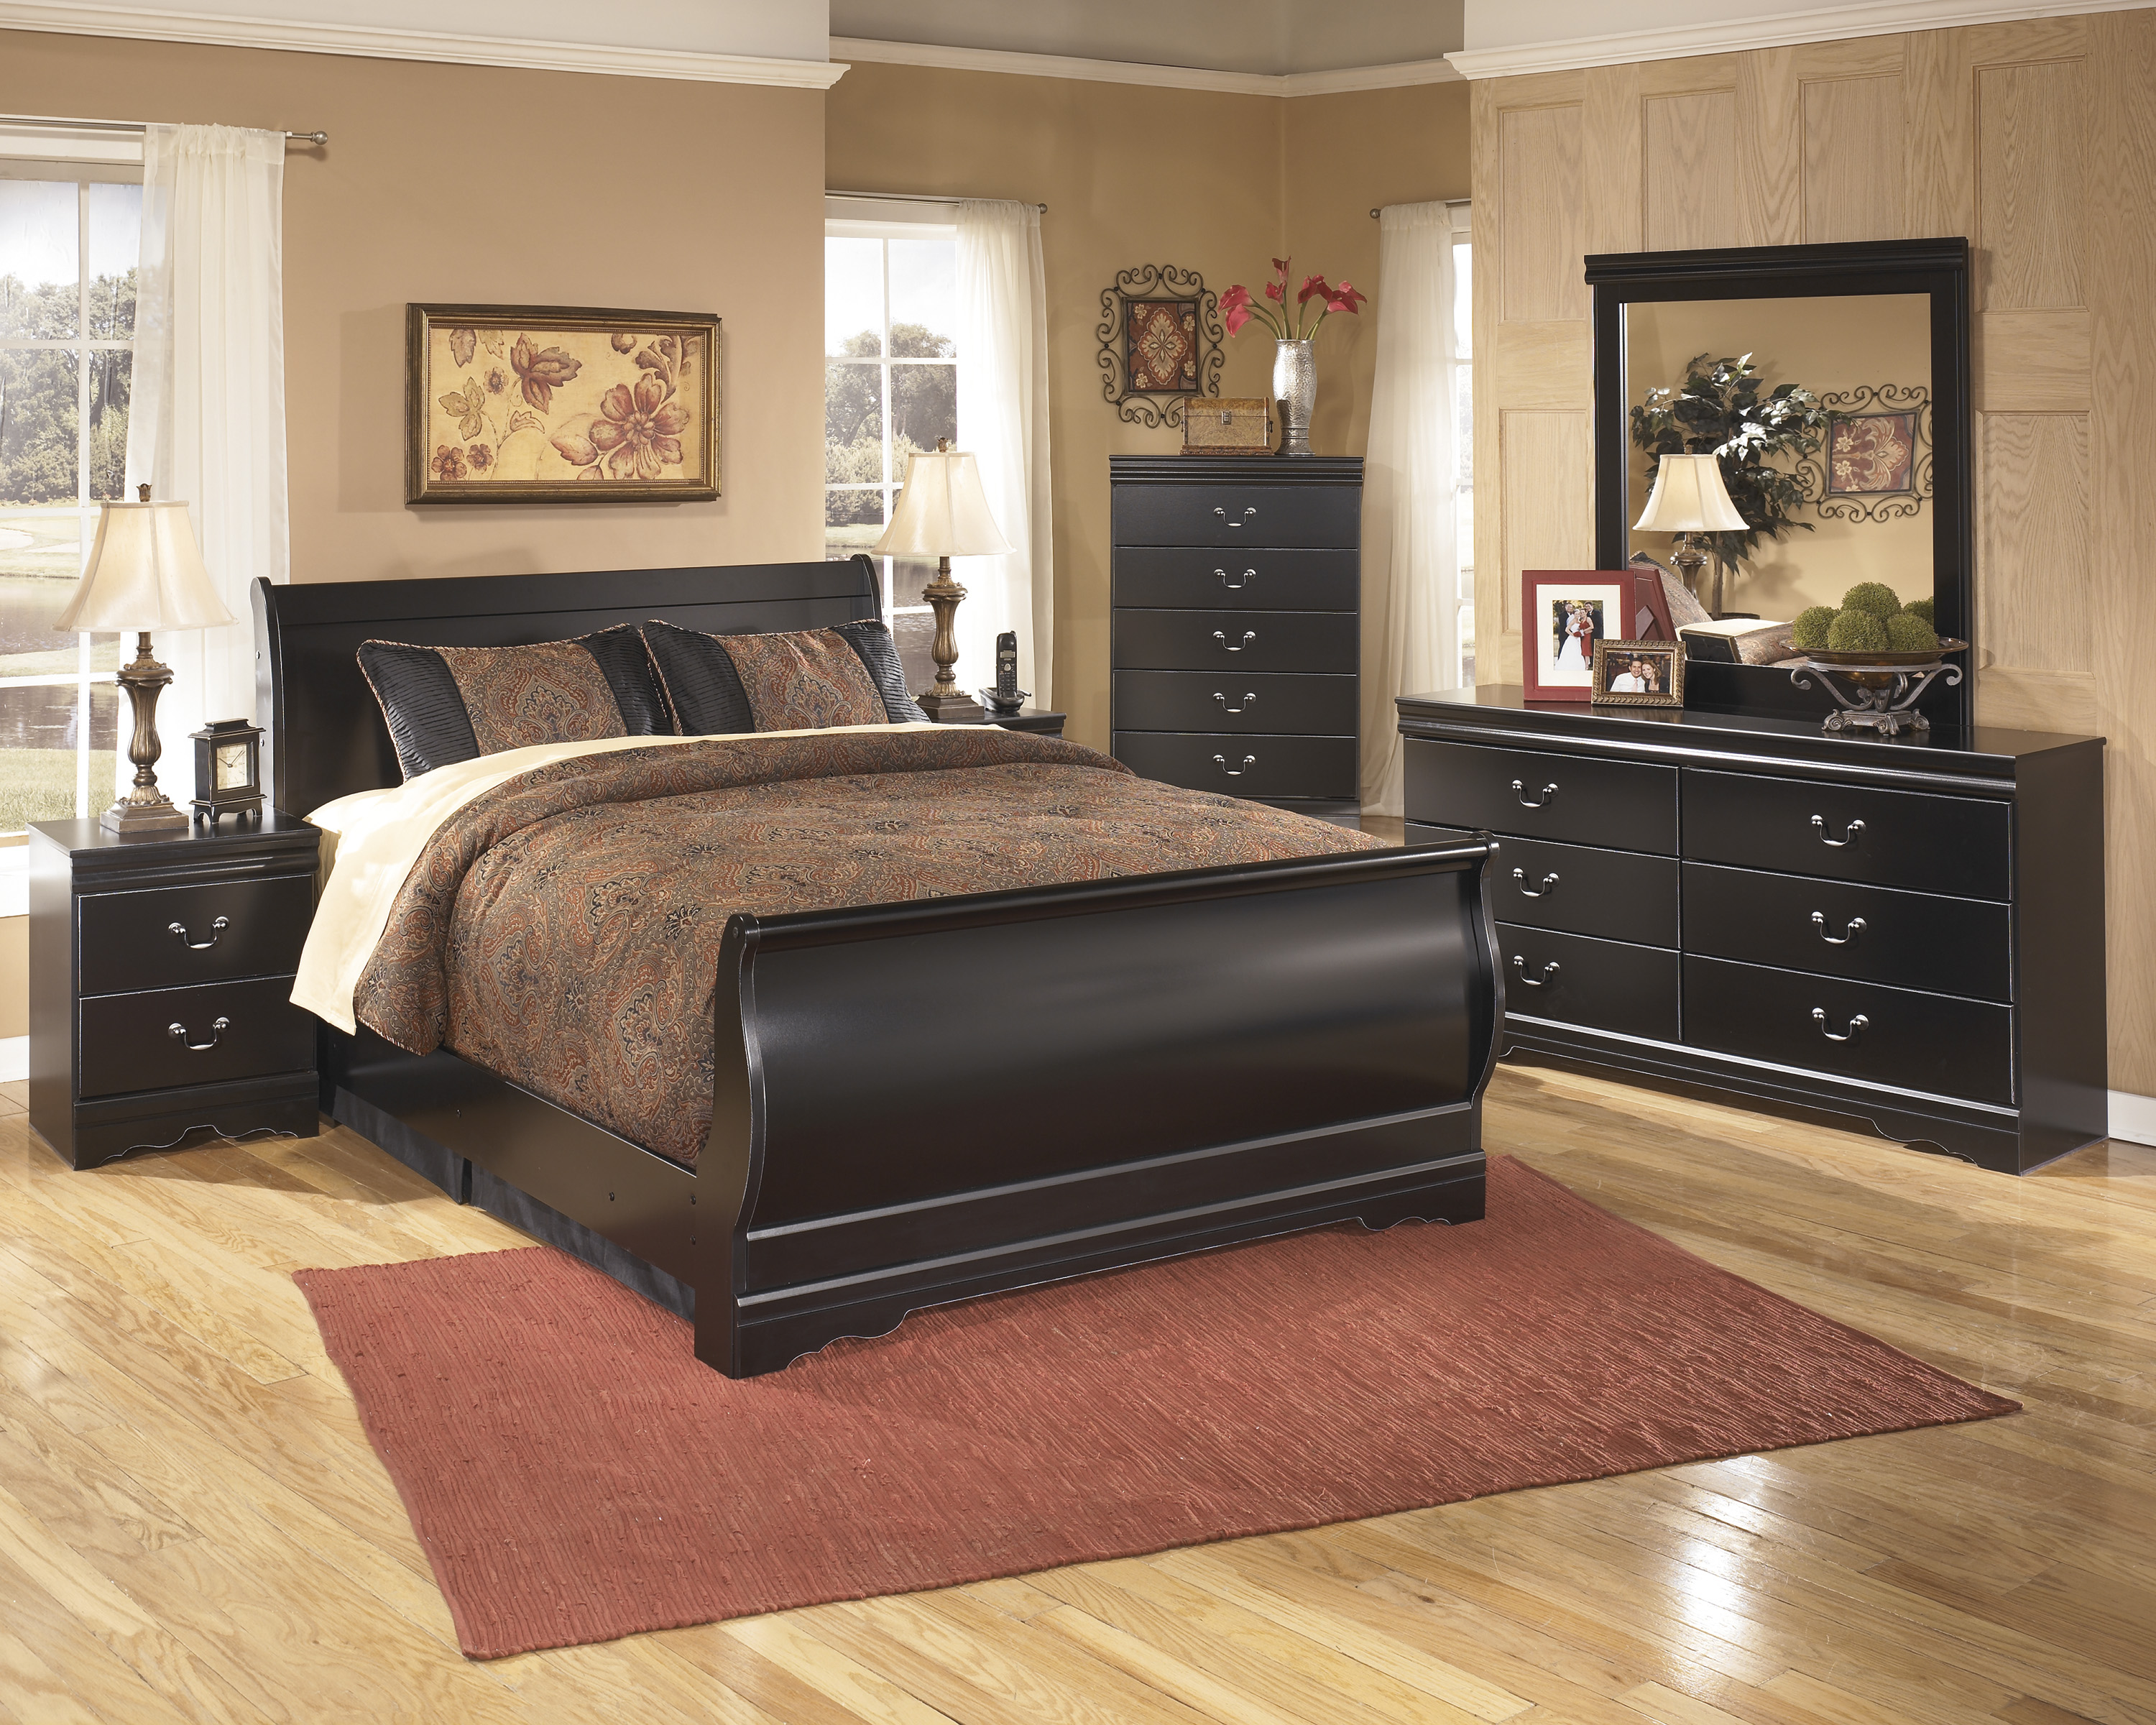 traditional black bedroom furniture photo - 7